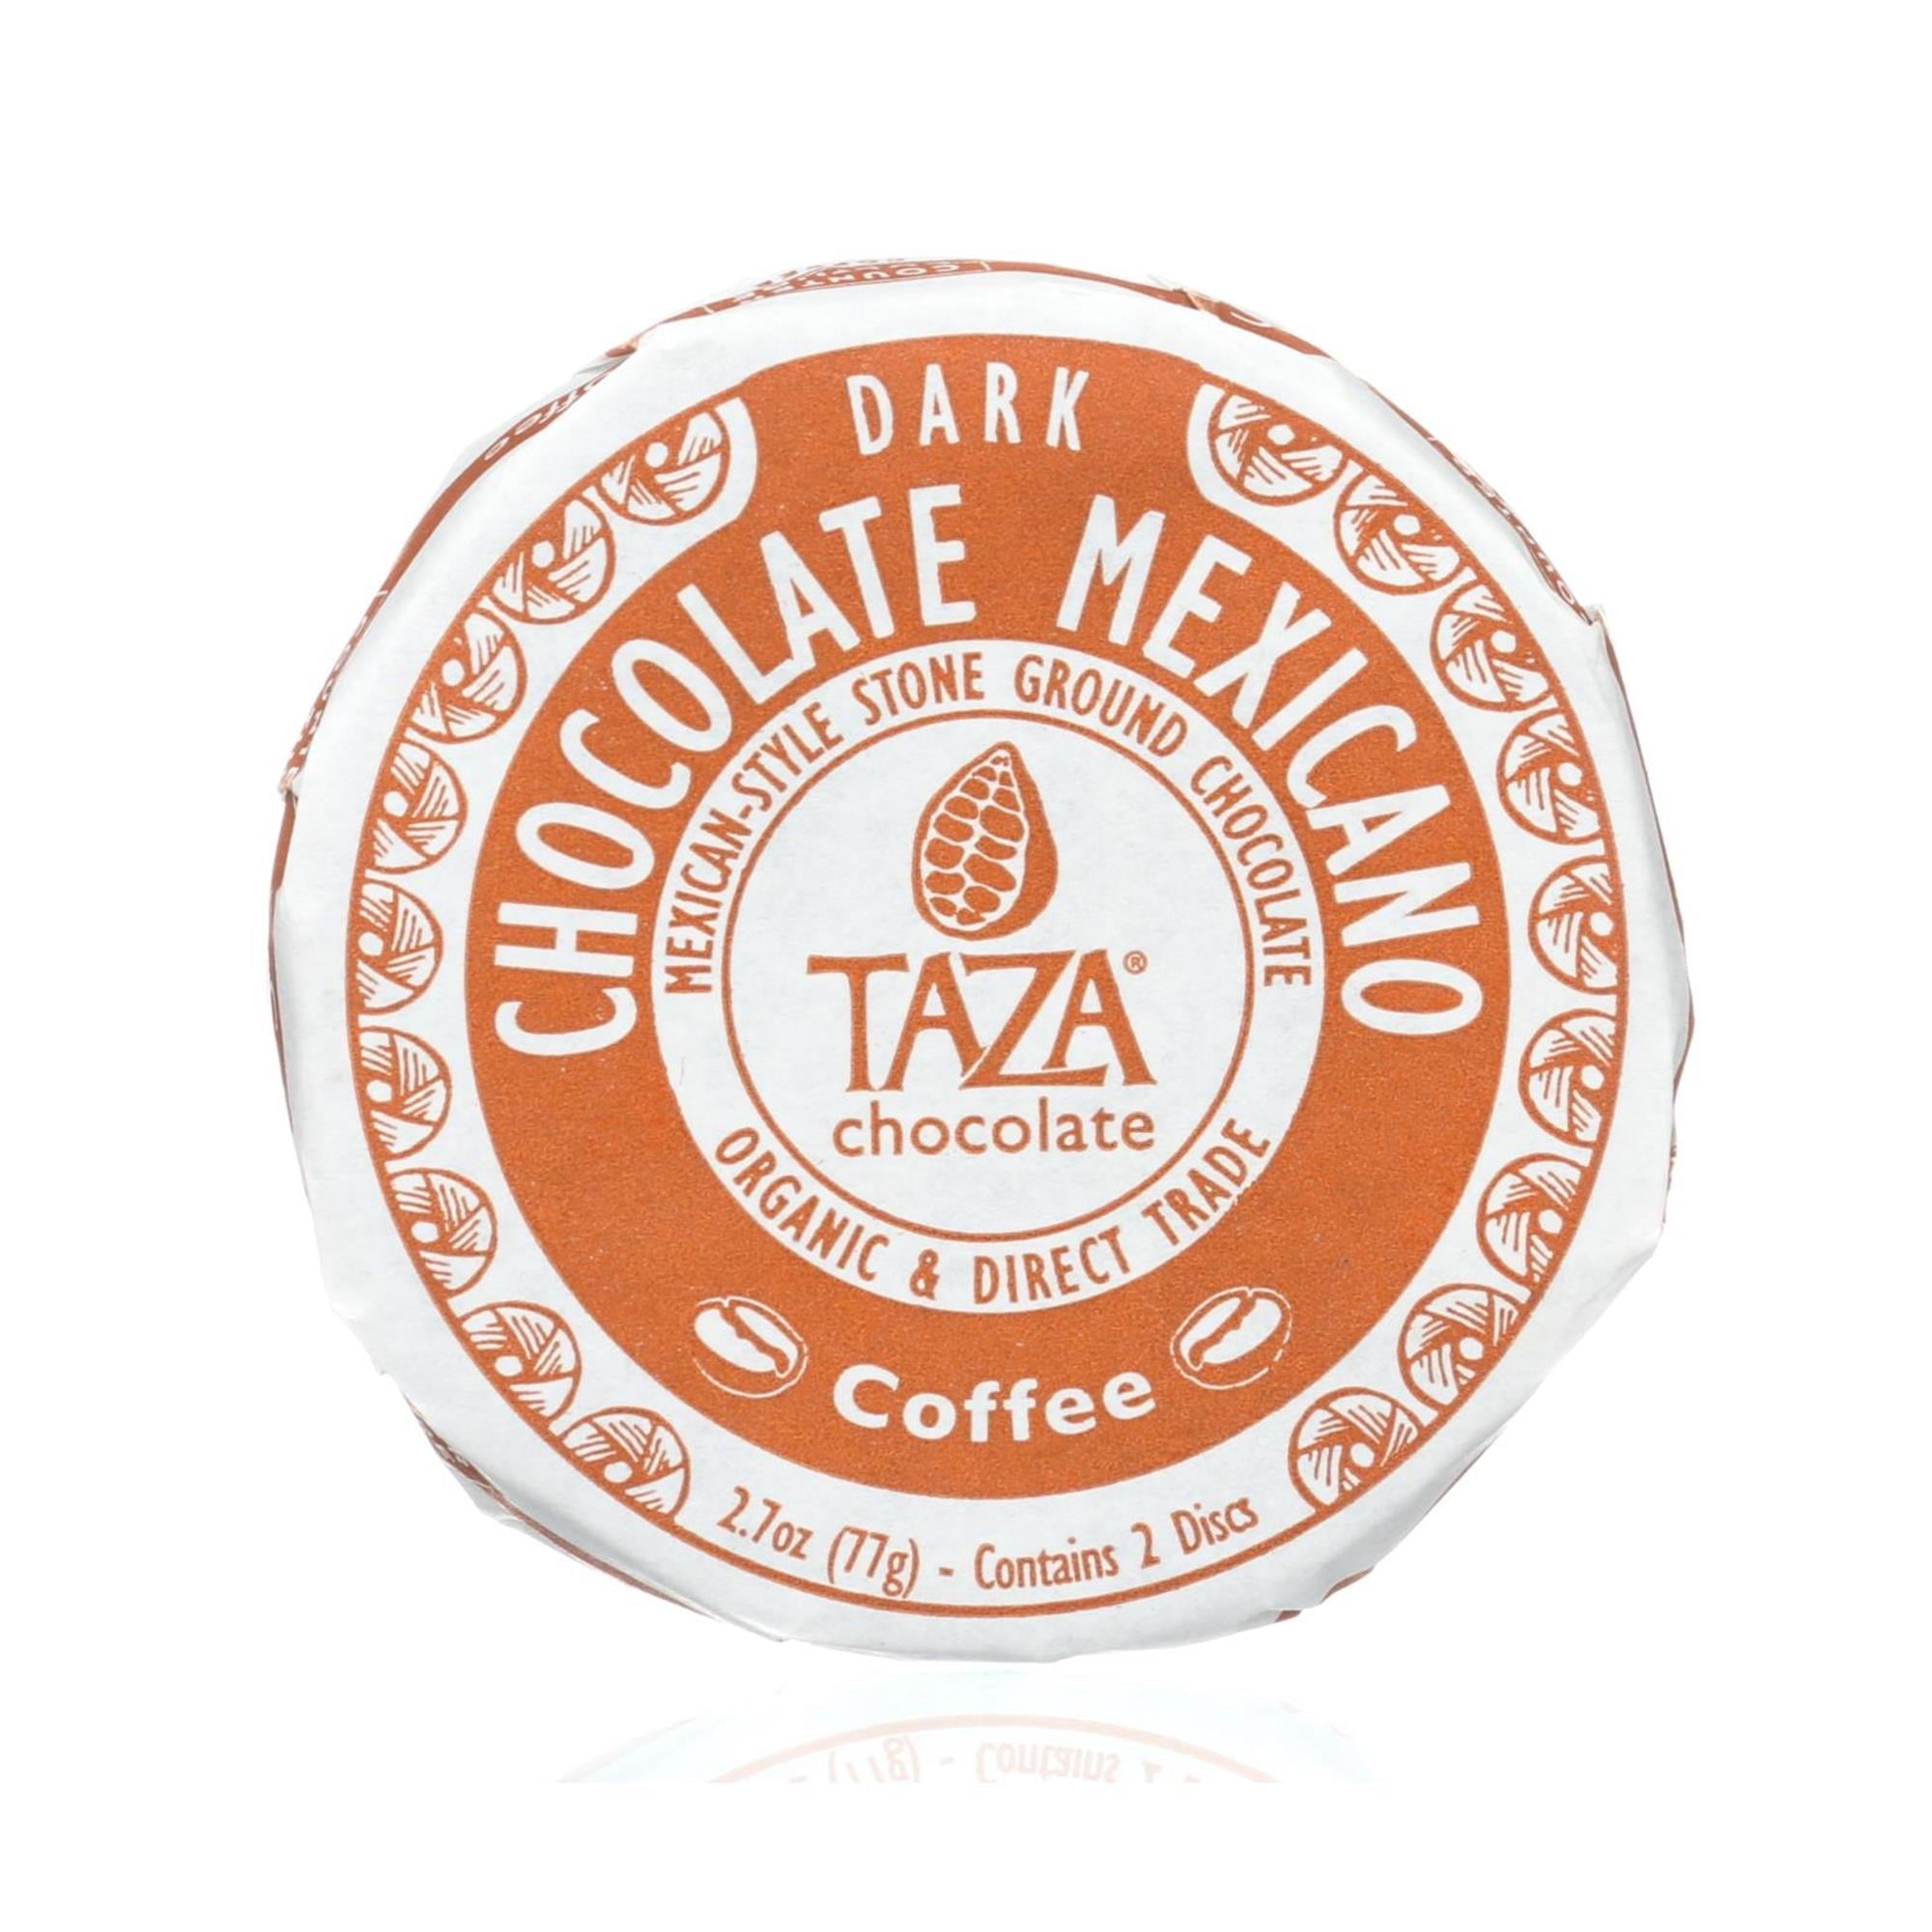 Taza Chocolate Organic Chocolate Disc Coffee 2.7 Oz